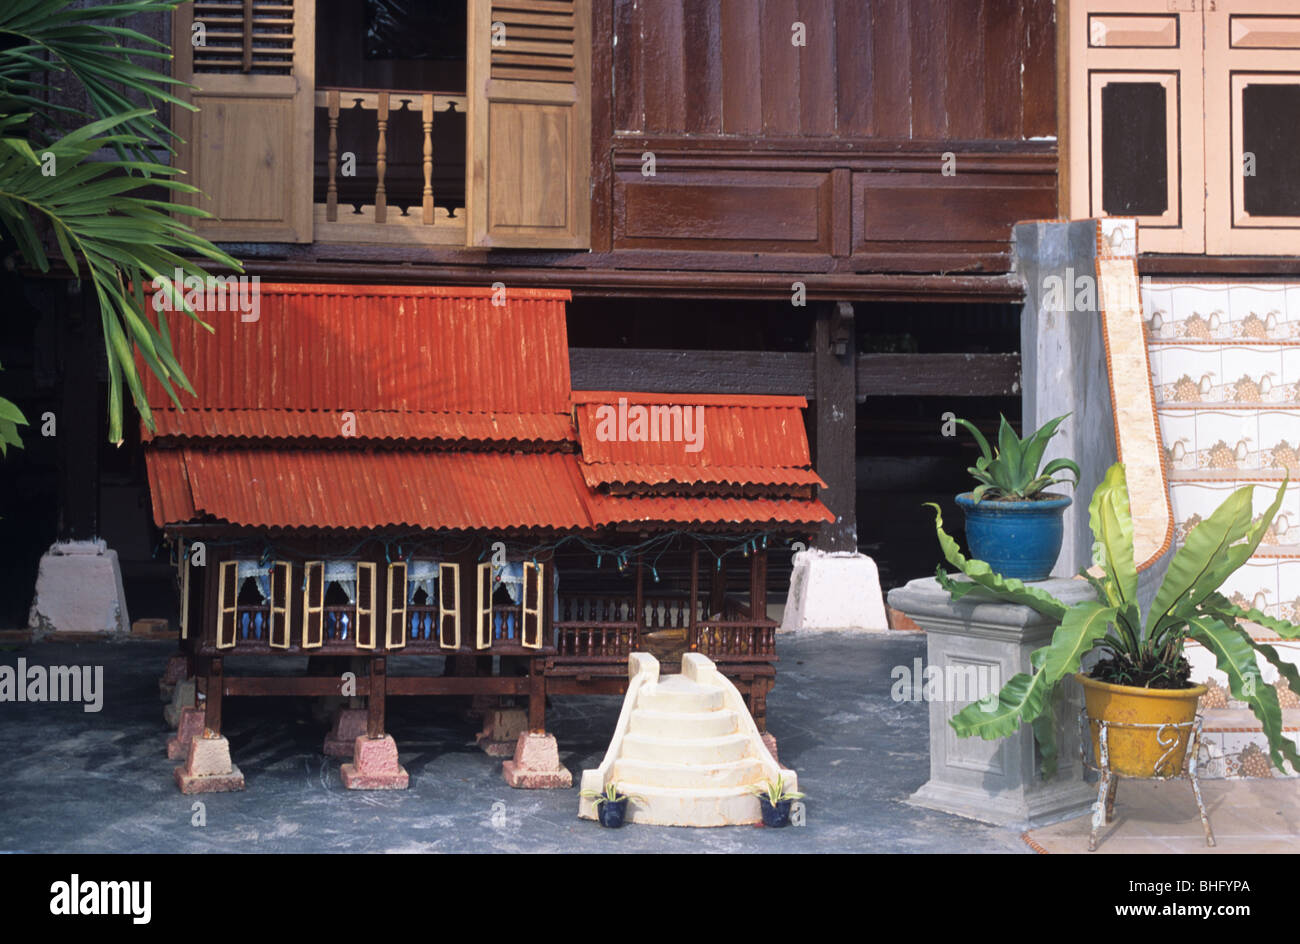 Modello di Casa Malay in miniatura come Street Art, Pavement Art o Folk Art fuori Malay Melaka o Malacca House, Morten Village, Malacca City, Malesia Foto Stock